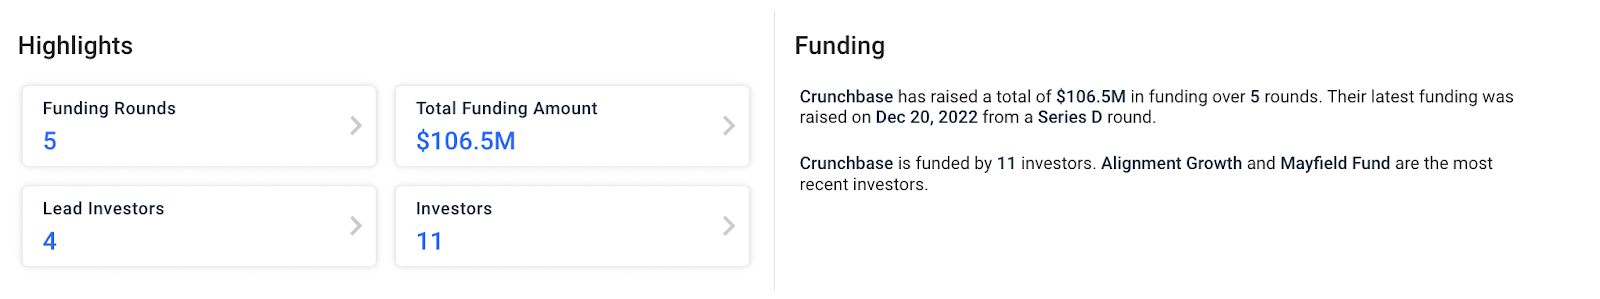 9animeshow - Crunchbase Company Profile & Funding